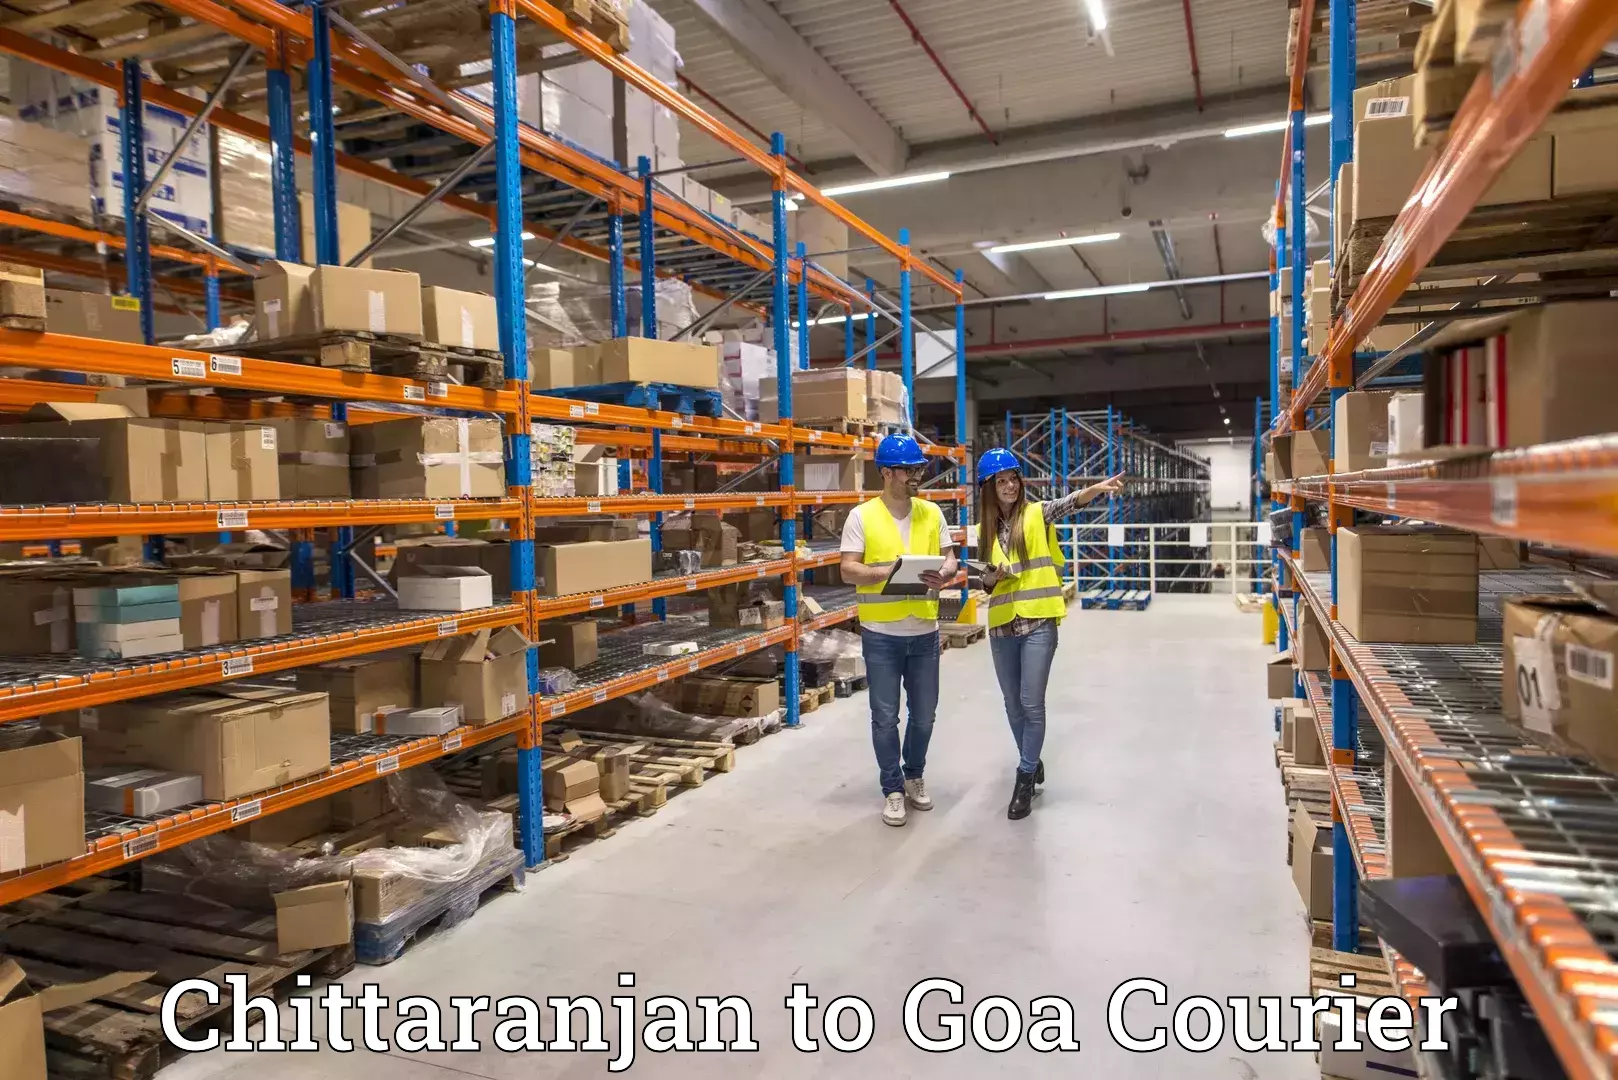 Express delivery capabilities Chittaranjan to Goa